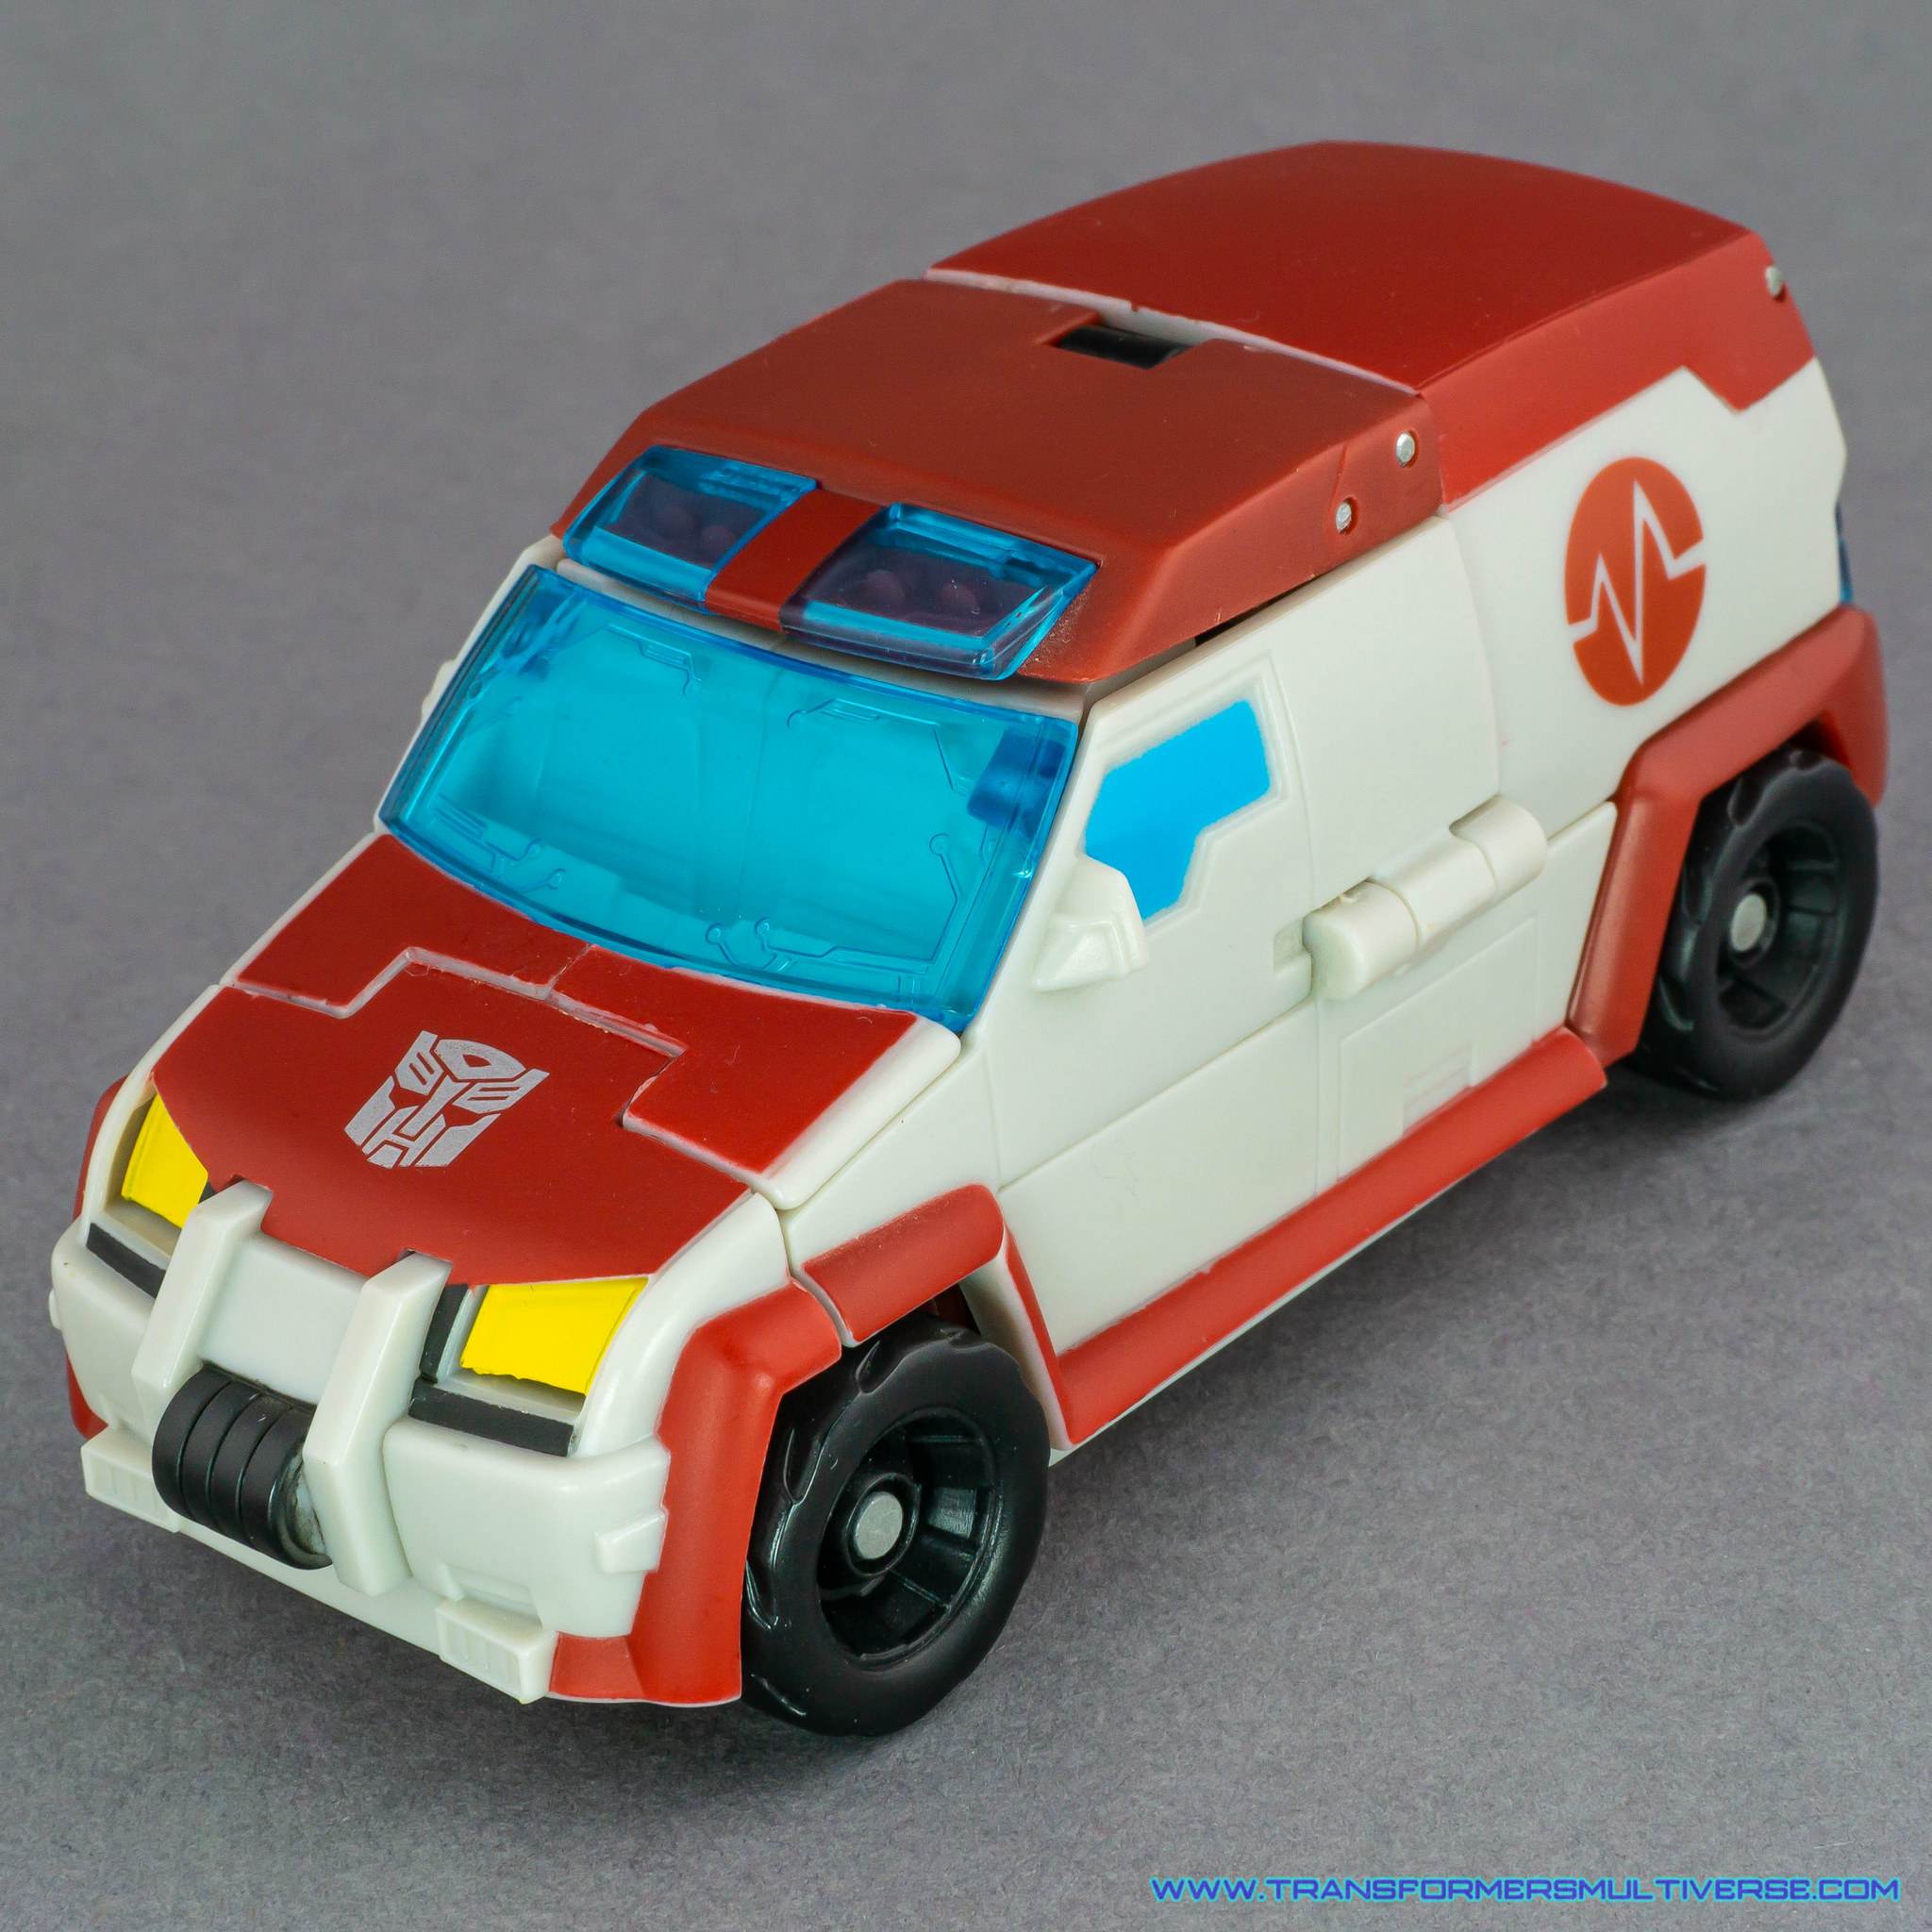 Transformers Animated Ratchet Ambulance mode